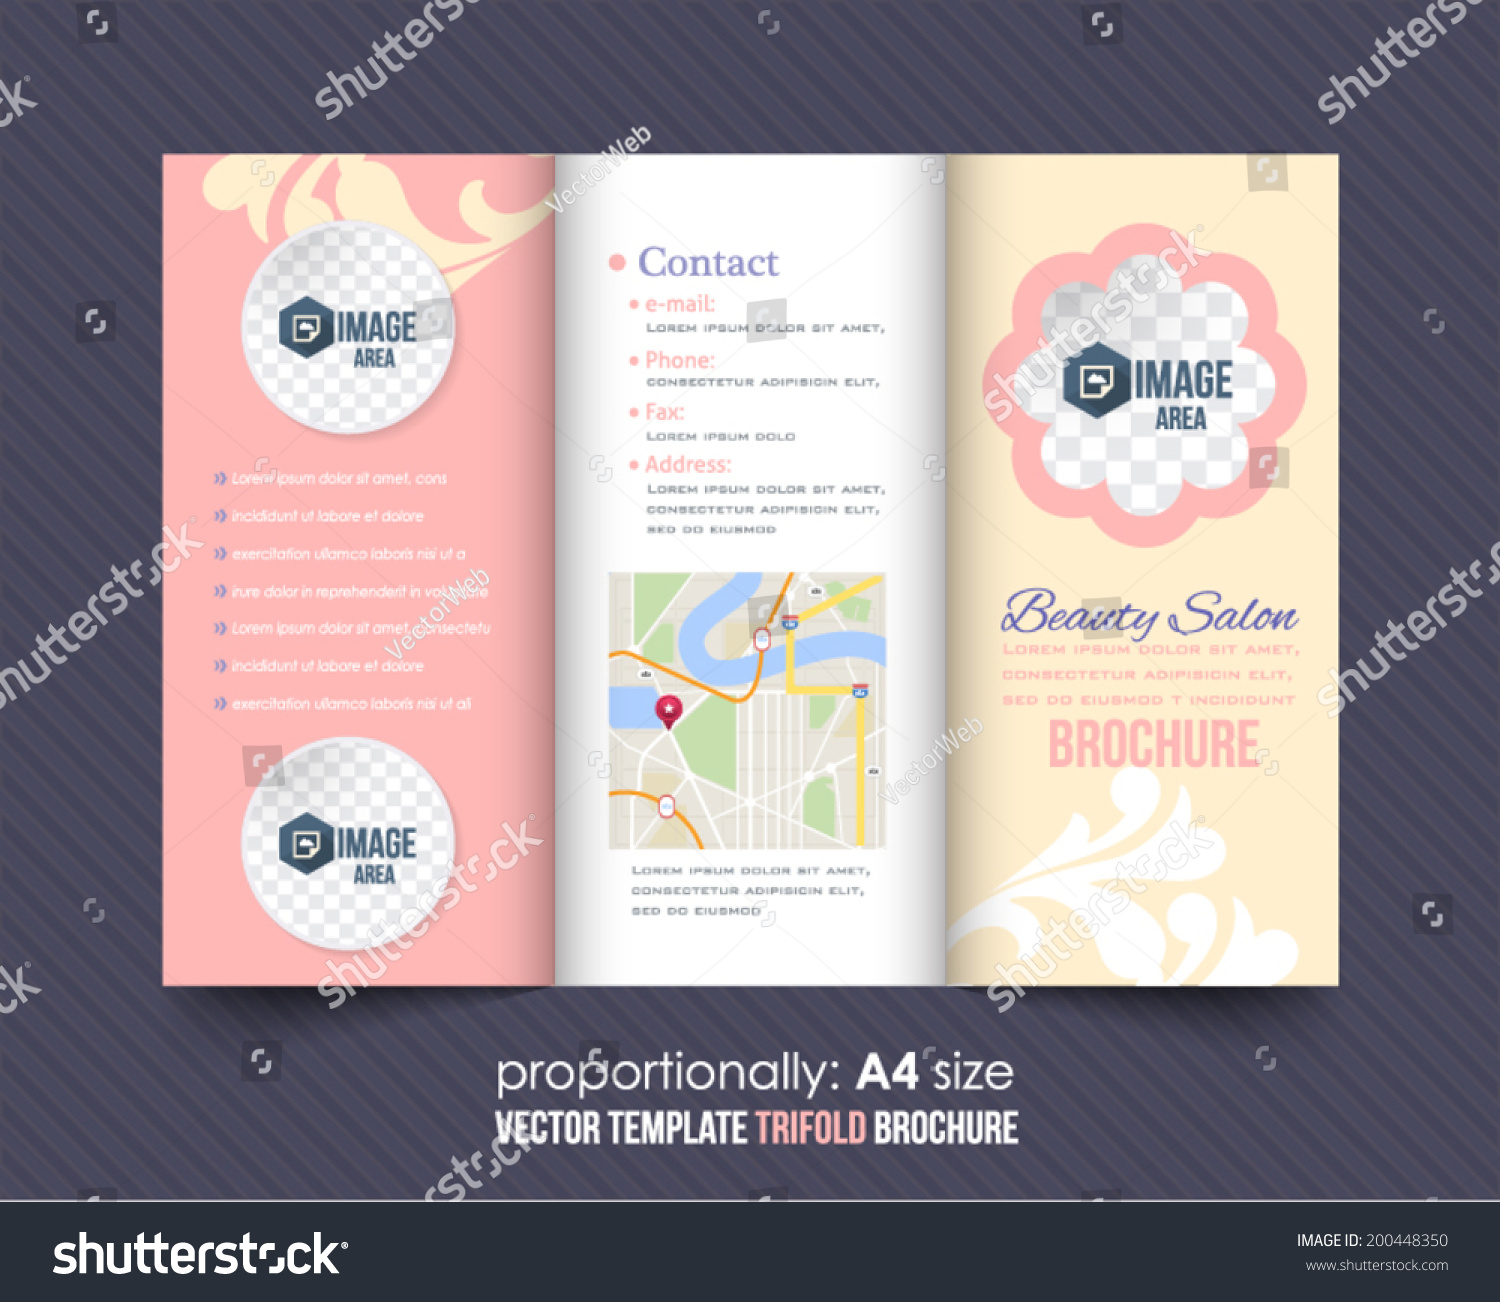 30+ Top For Cute Brochure Ideas - Align Boutique